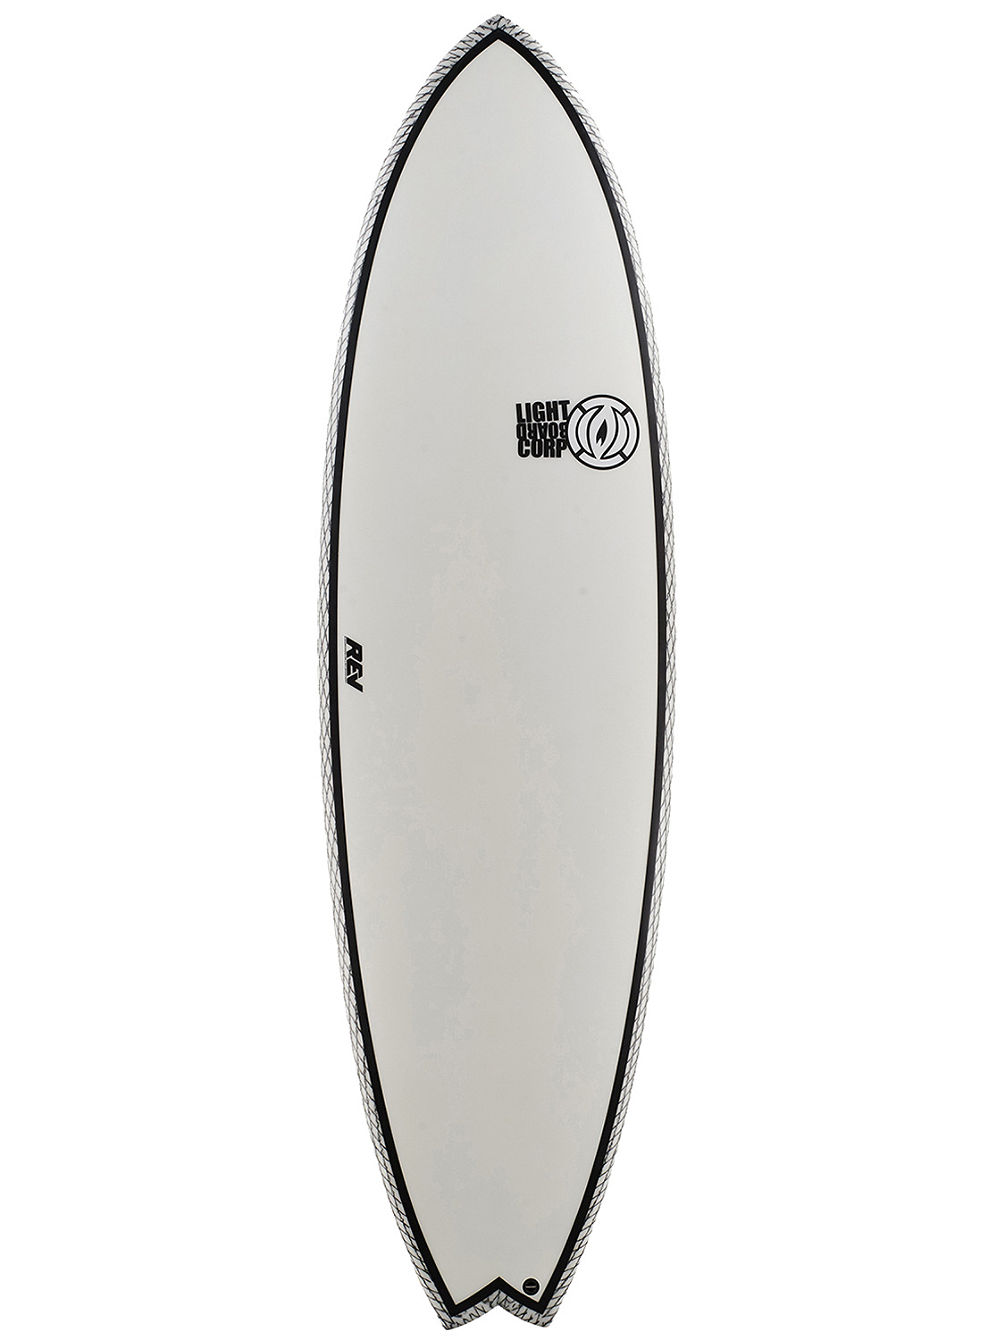 Truvalli Fish Cv Pro 6&amp;#039;6 Surfboard